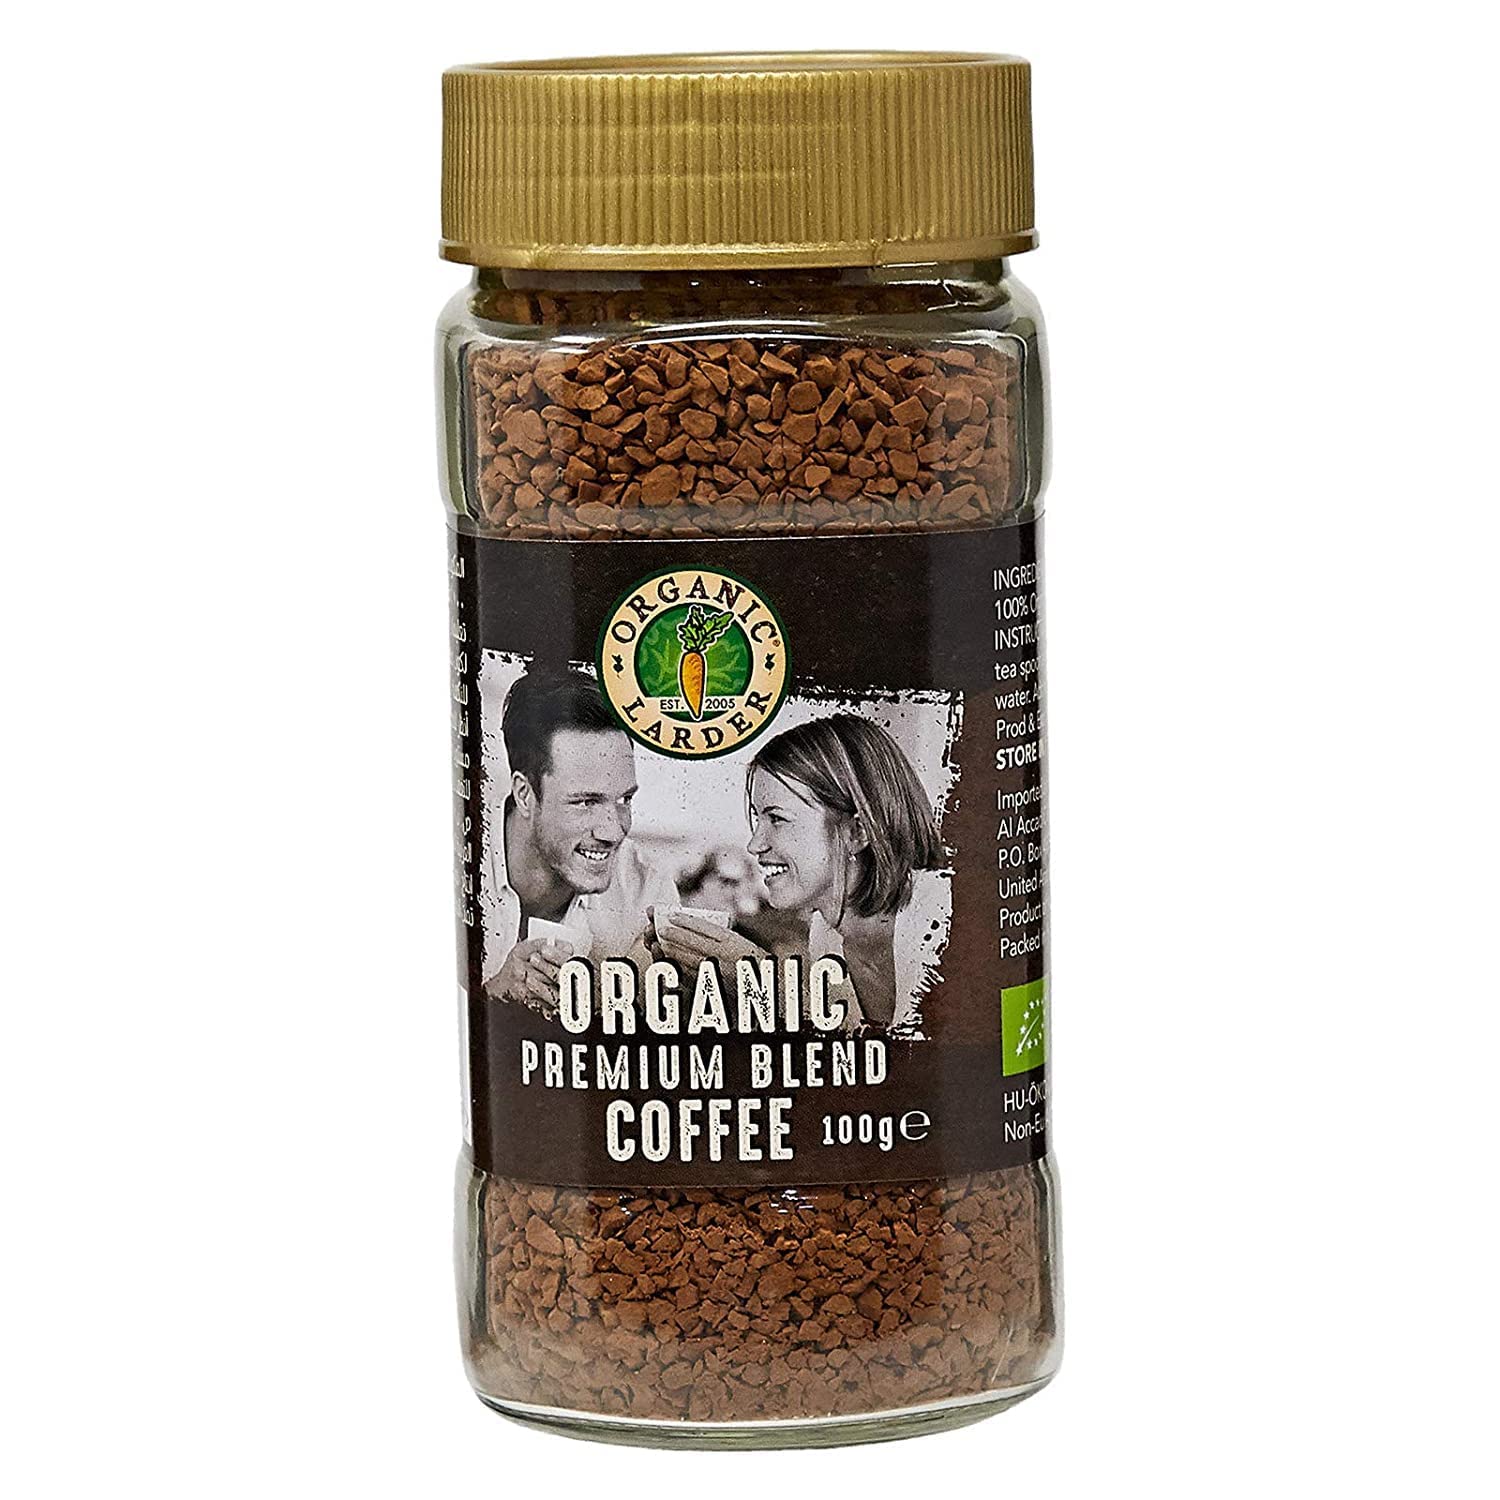 ORGANIC LARDER Organic Premium Blend Coffee, 100g - Organic, Natural